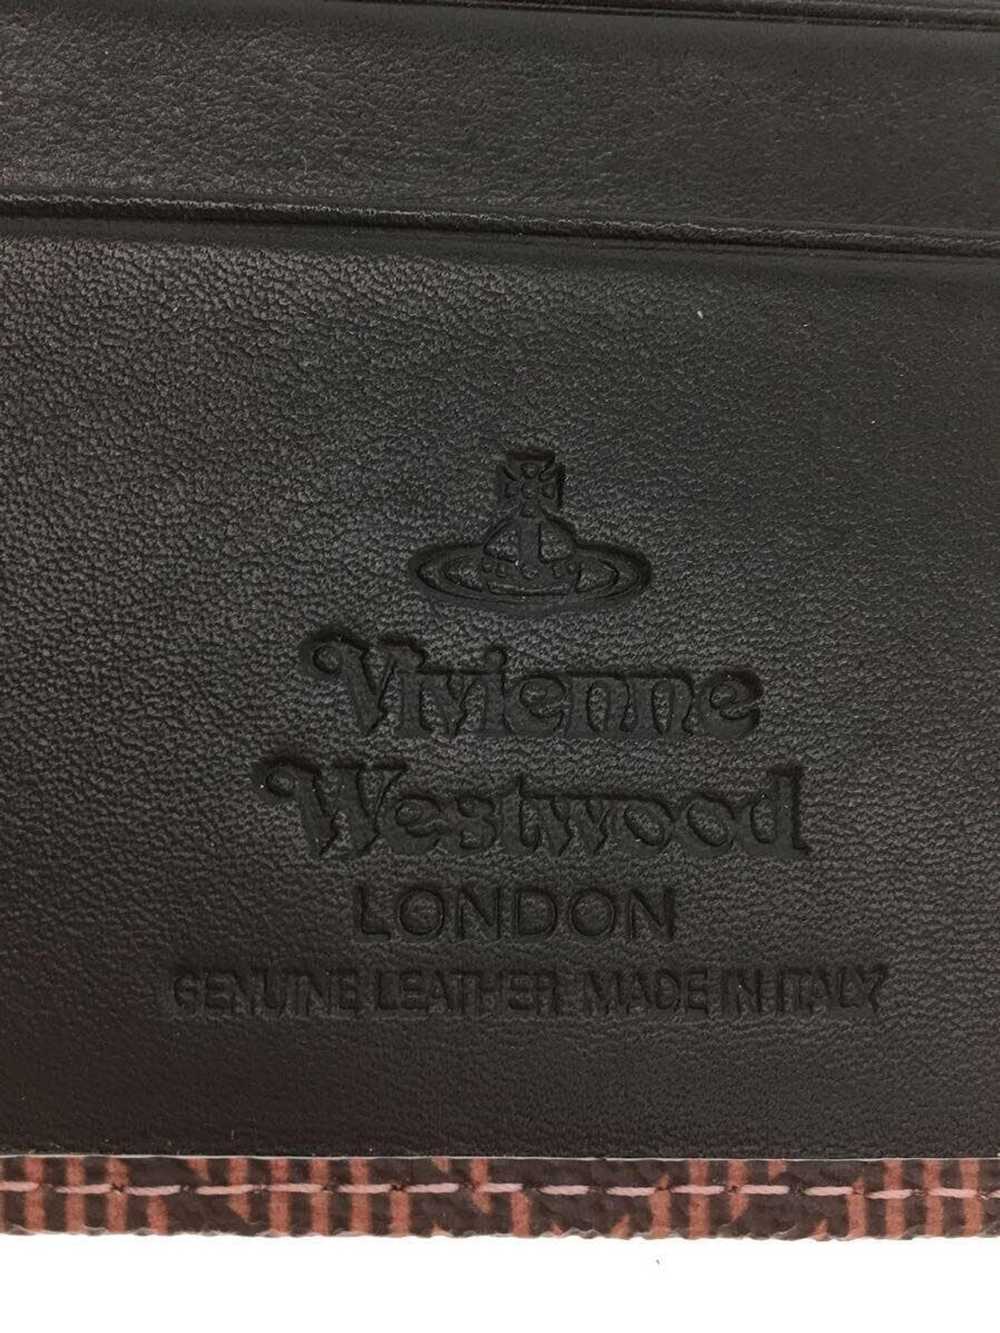 Vivienne Westwood Plaid Orb Leather Wallet - image 6